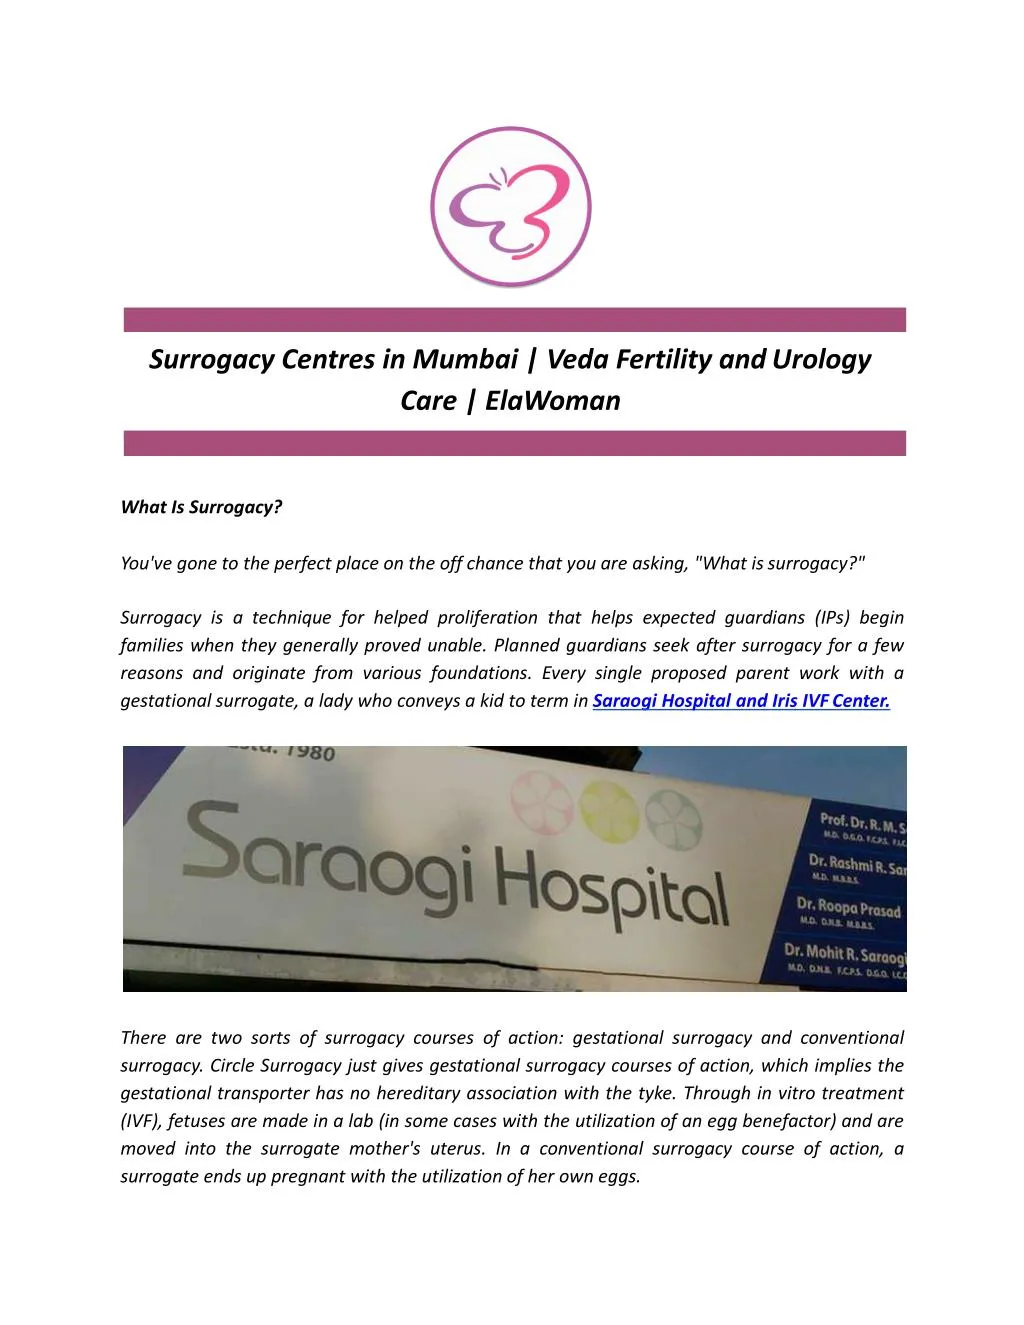 surrogacy centres in mumbai veda fertility